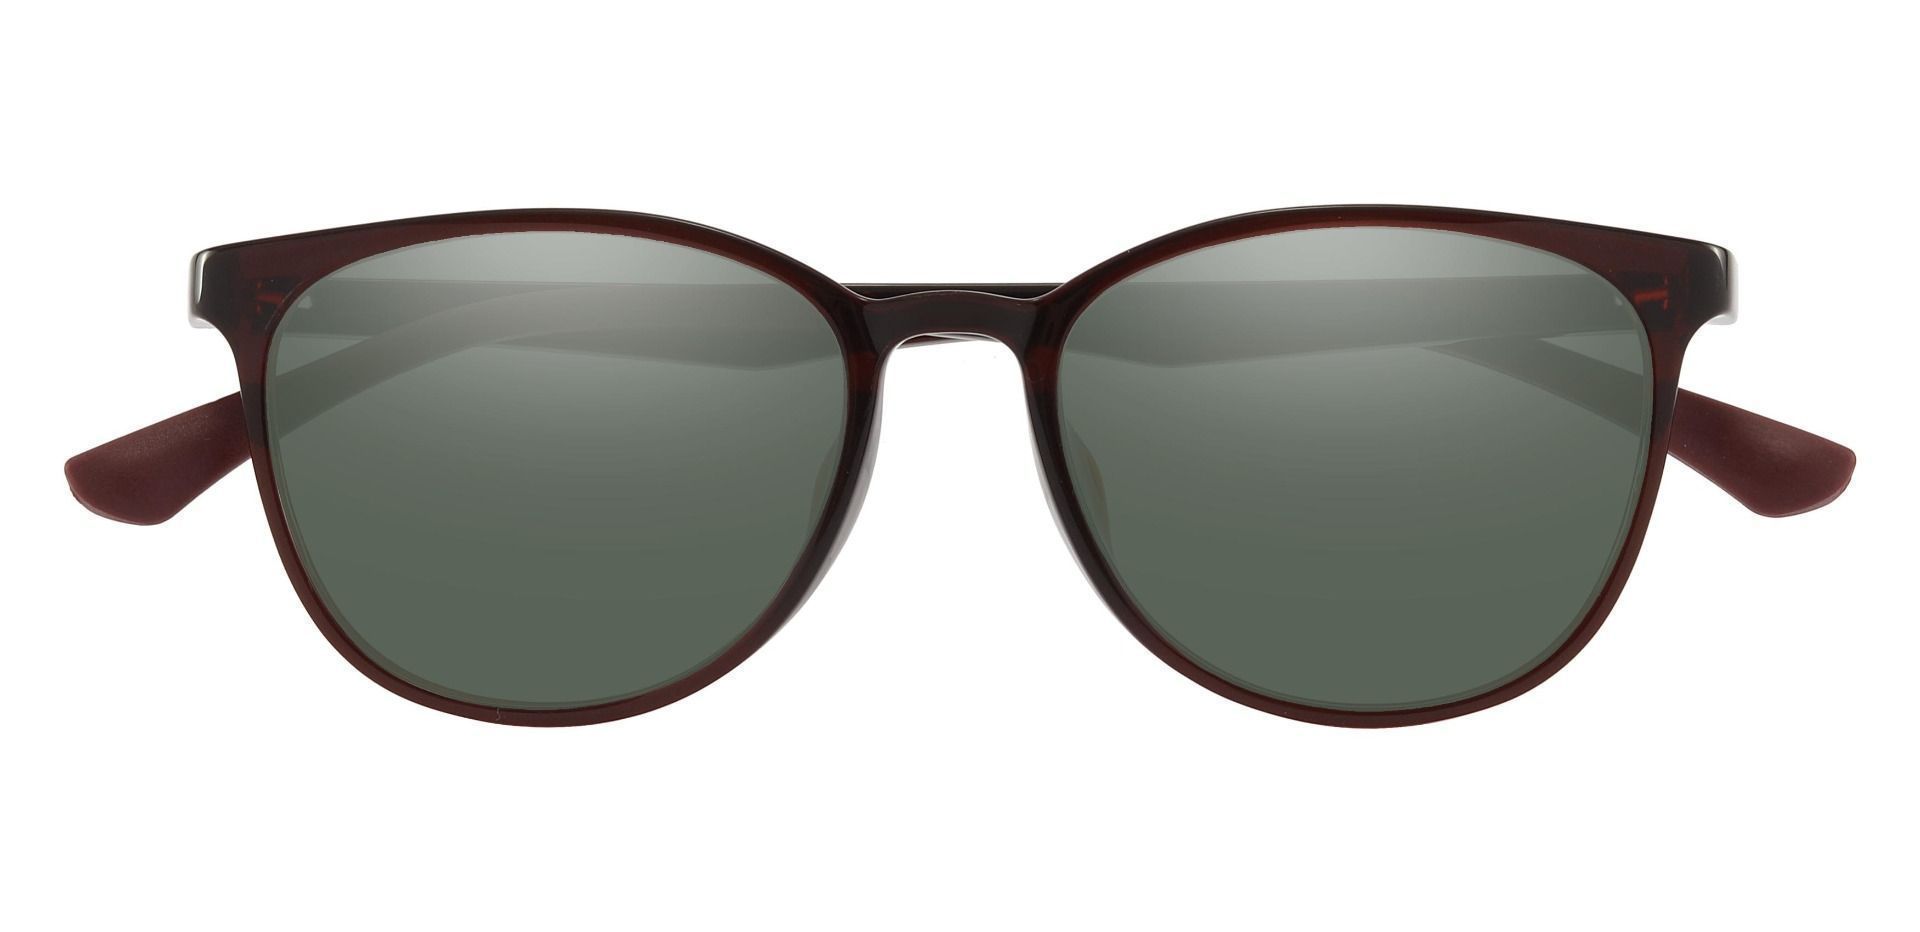 Pembroke Oval Progressive Sunglasses - Brown Frame With Green Lenses